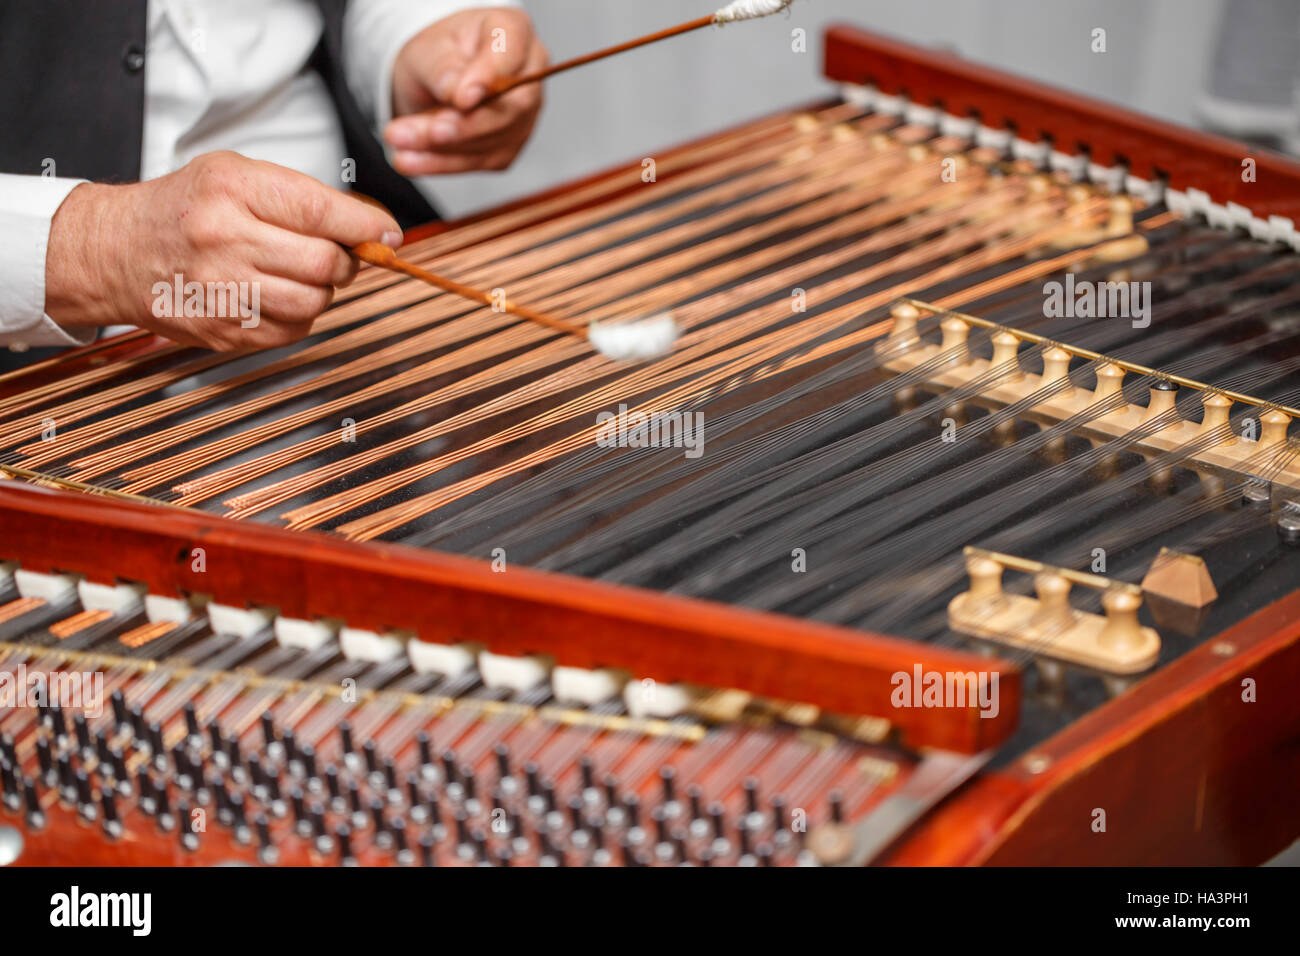 Tocar el instrumento musical folklórica dulcimer Fotografía de stock - Alamy